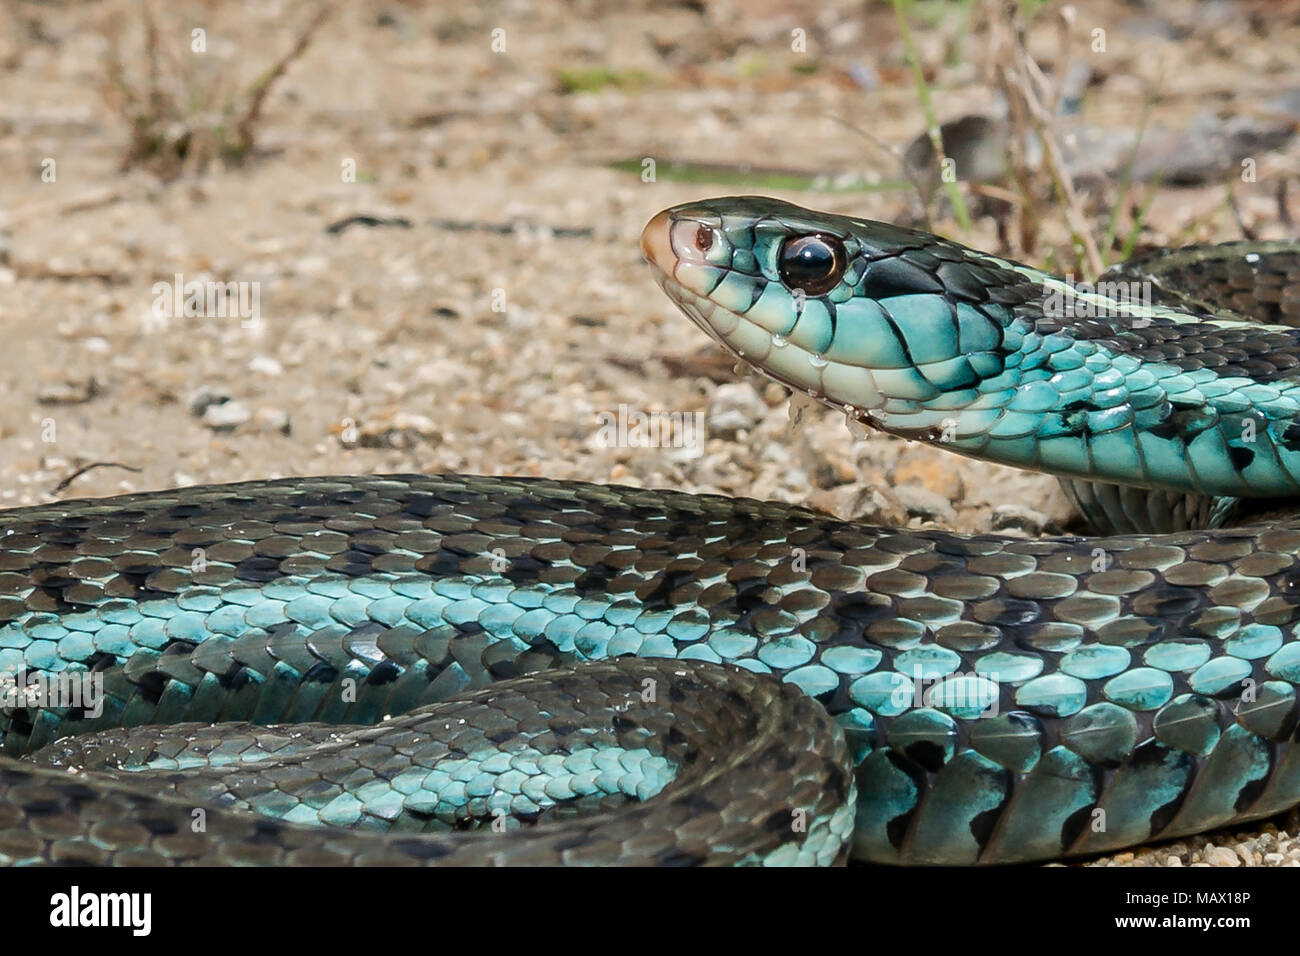 Bluestripe Garter Snake (Thamnophis sirtalis simillis) Stock Photo